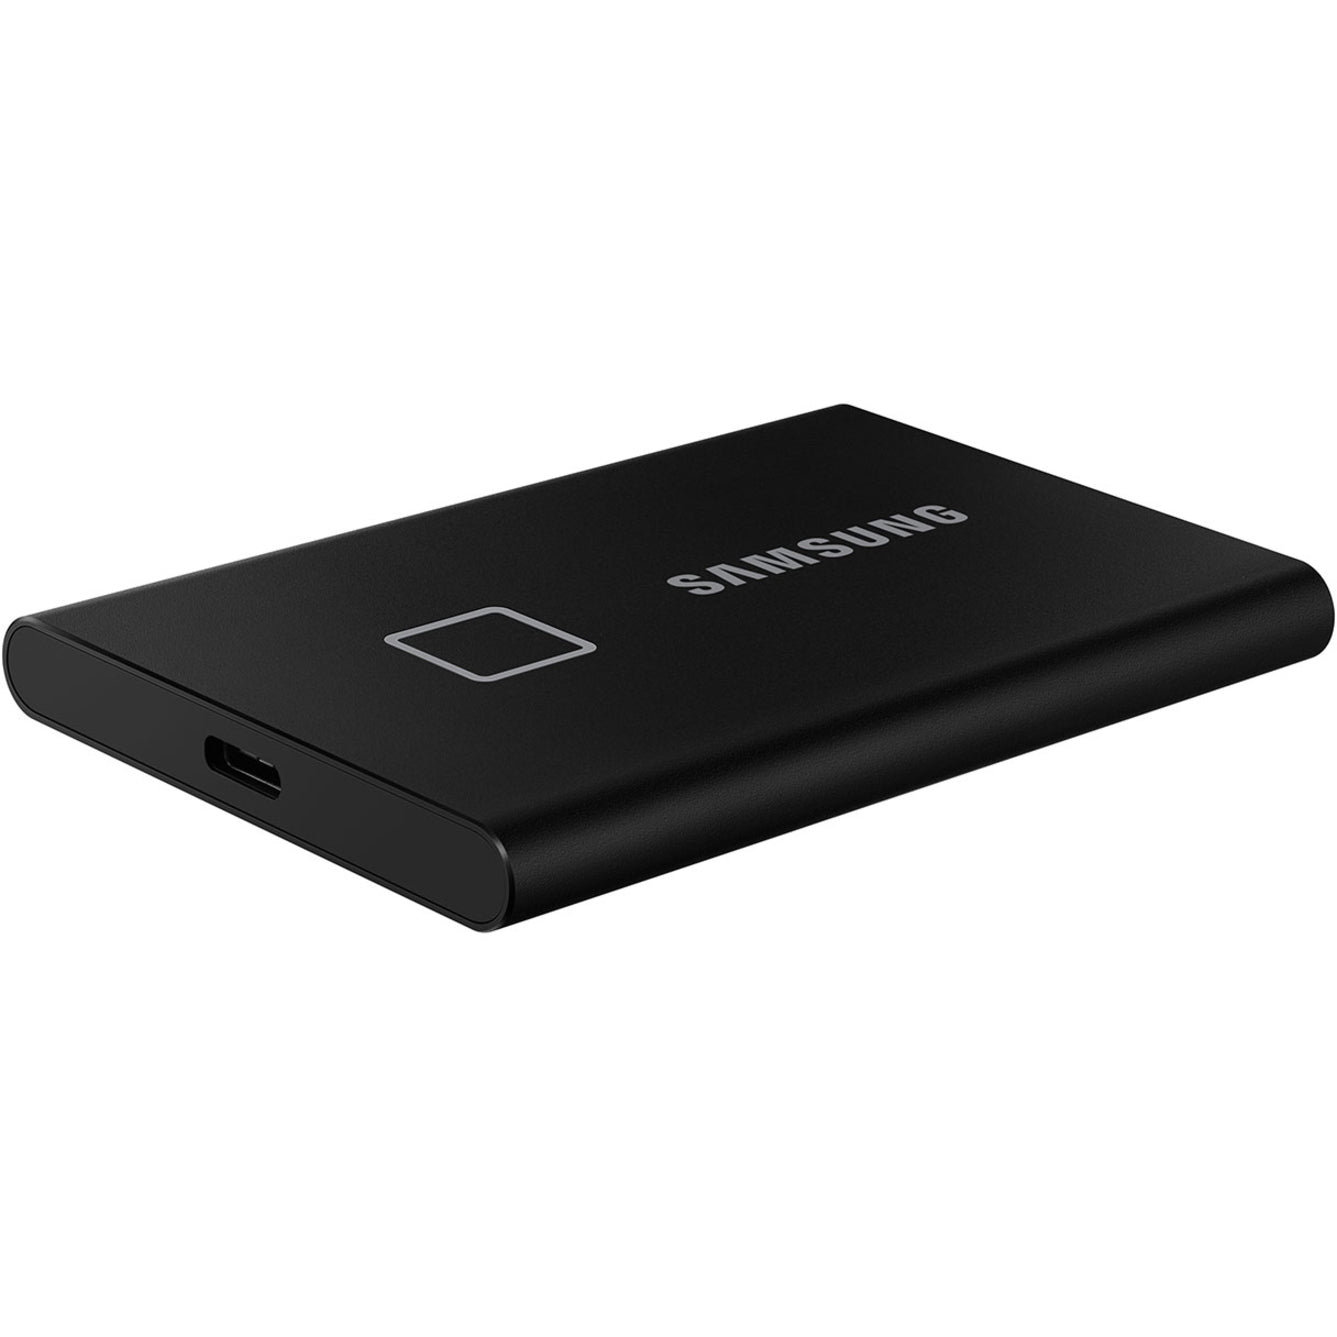 Samsung MU-PC2T0K/WW Portable SSD T7 Touch USB 3.2 2TB (Black), Fingerprint Recognition, 3-Year Warranty